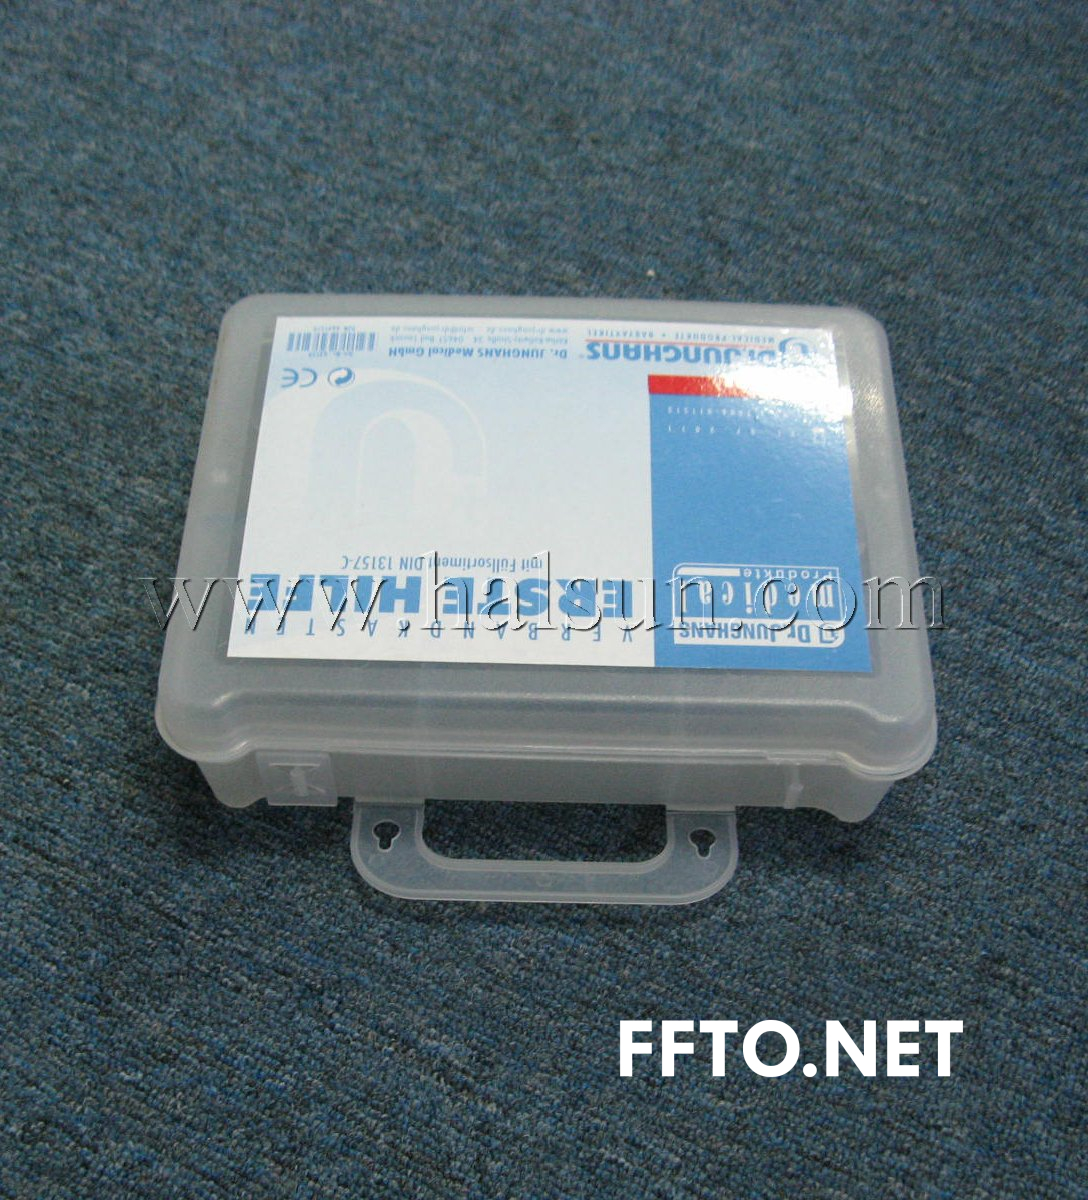 First Aid Kits,HSFAK013